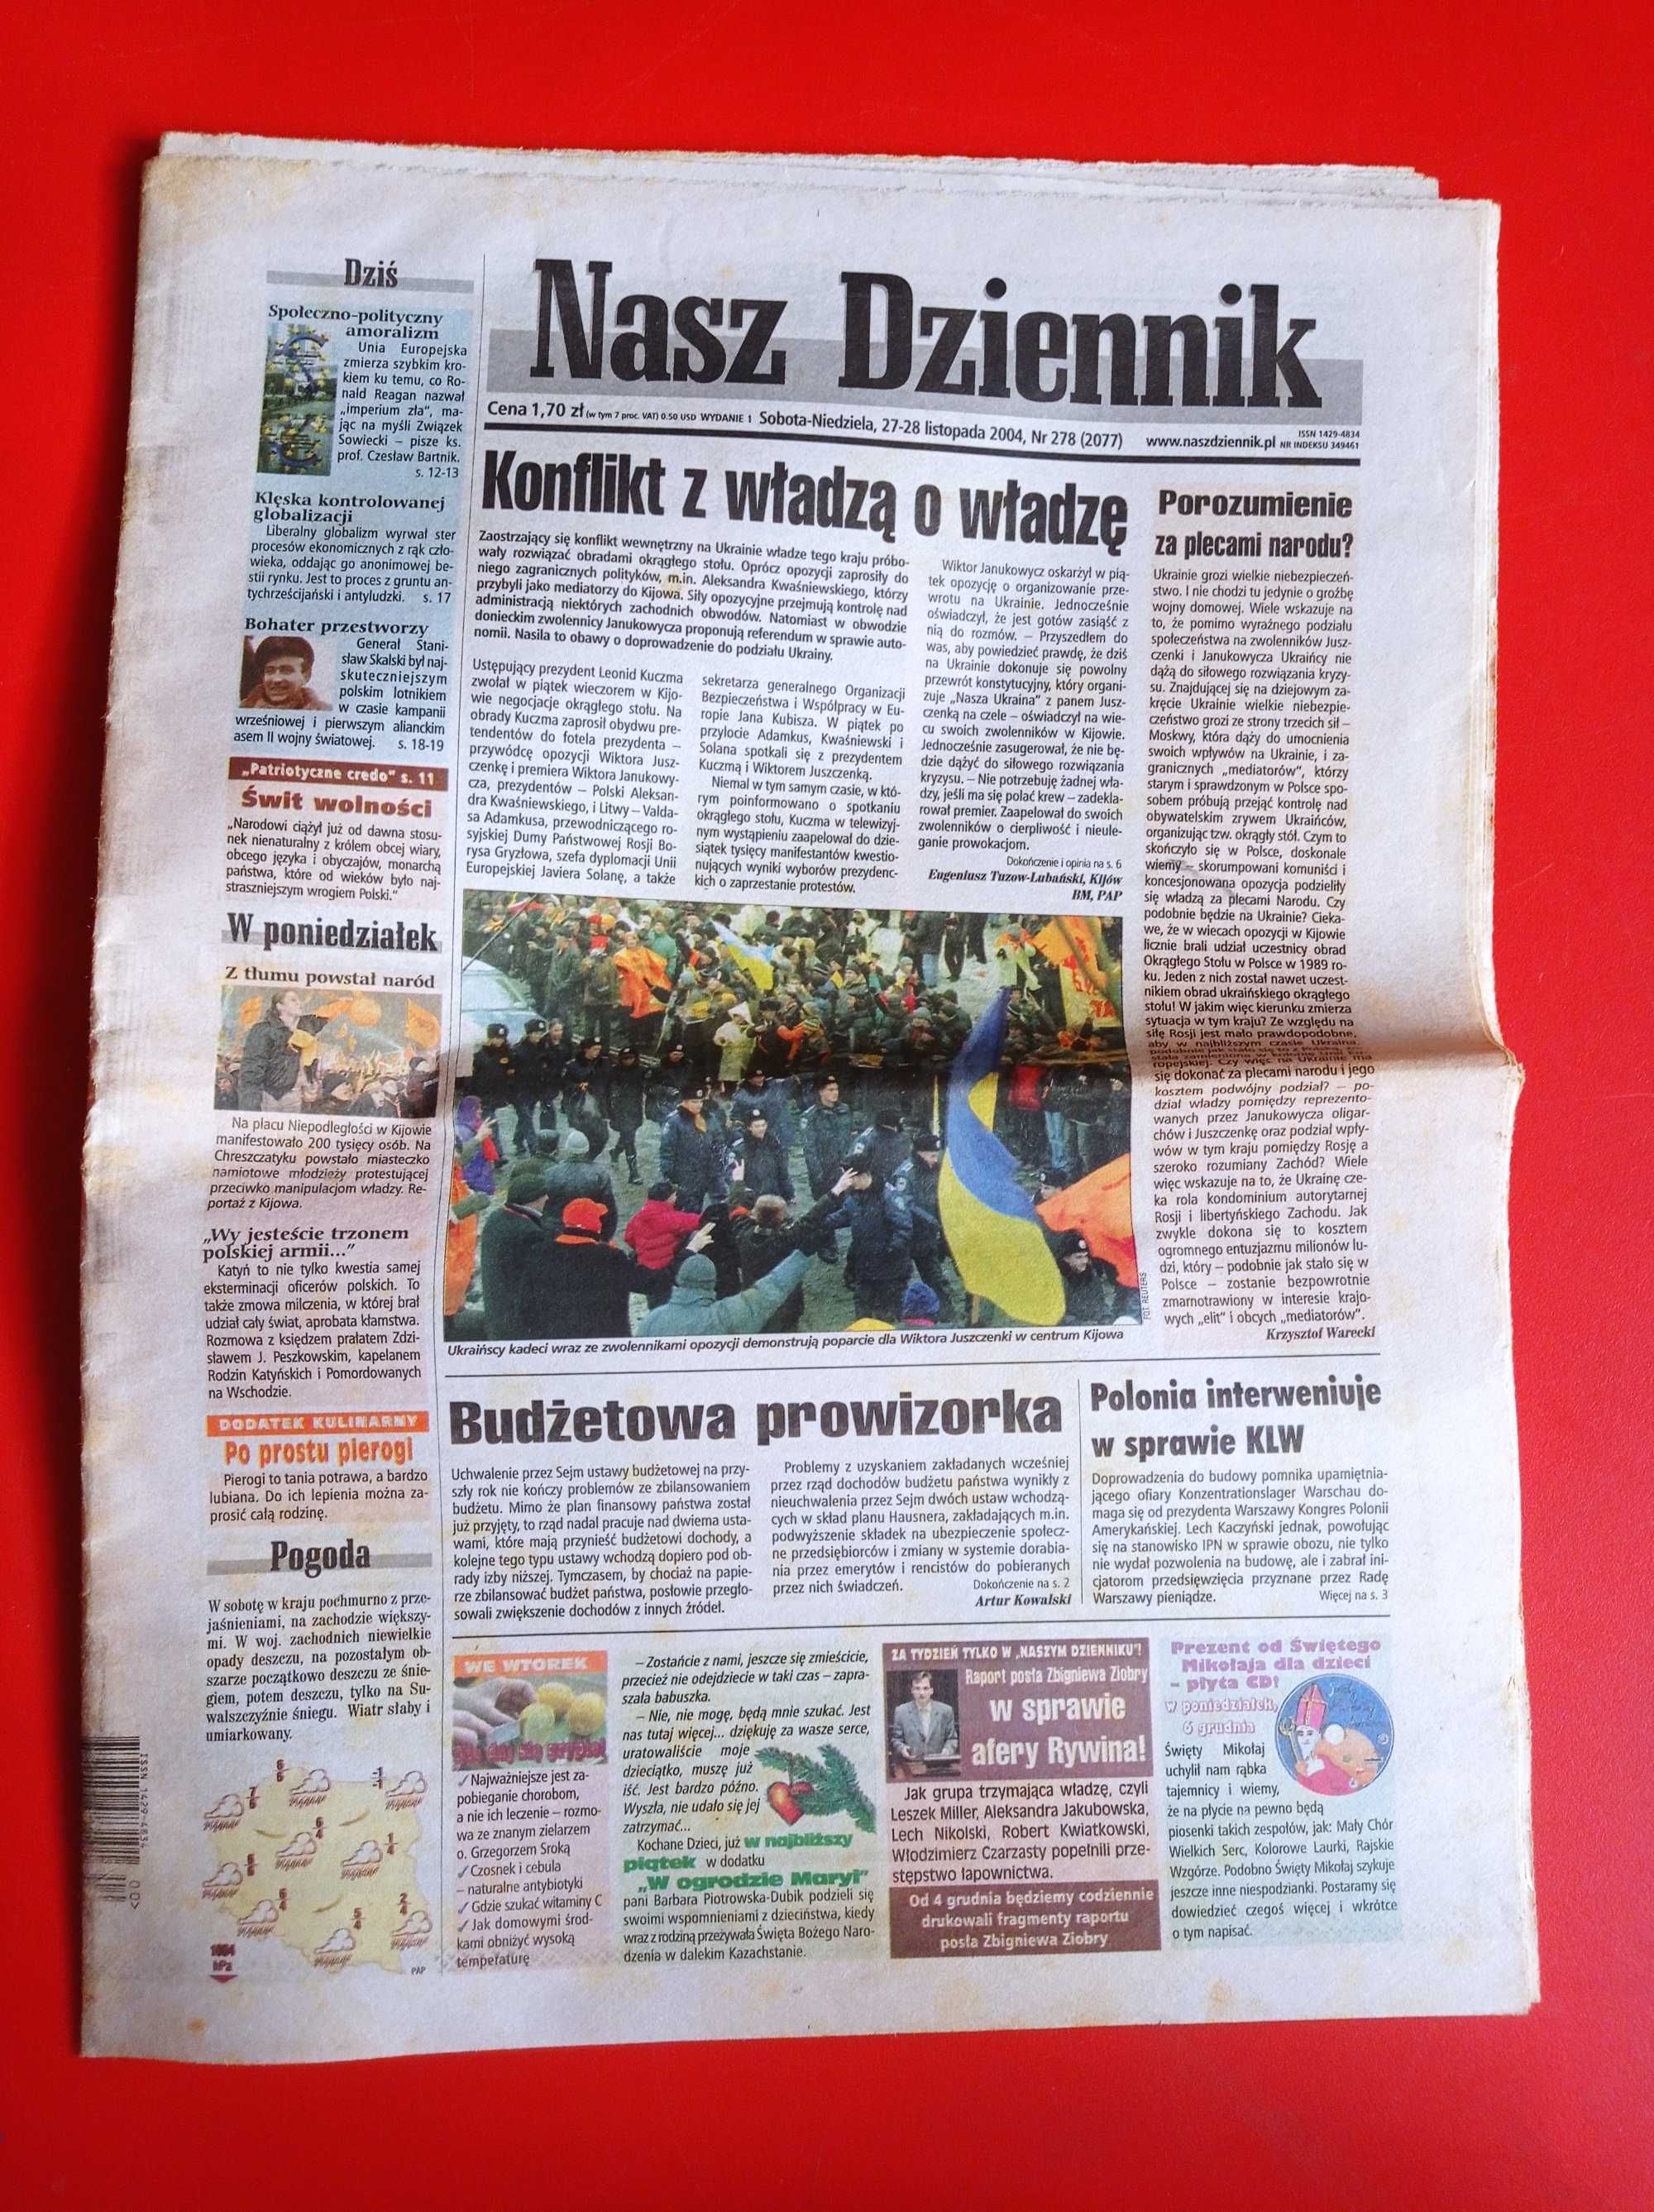 Nasz Dziennik, nr 278/2004, 27-28 listopada 2004